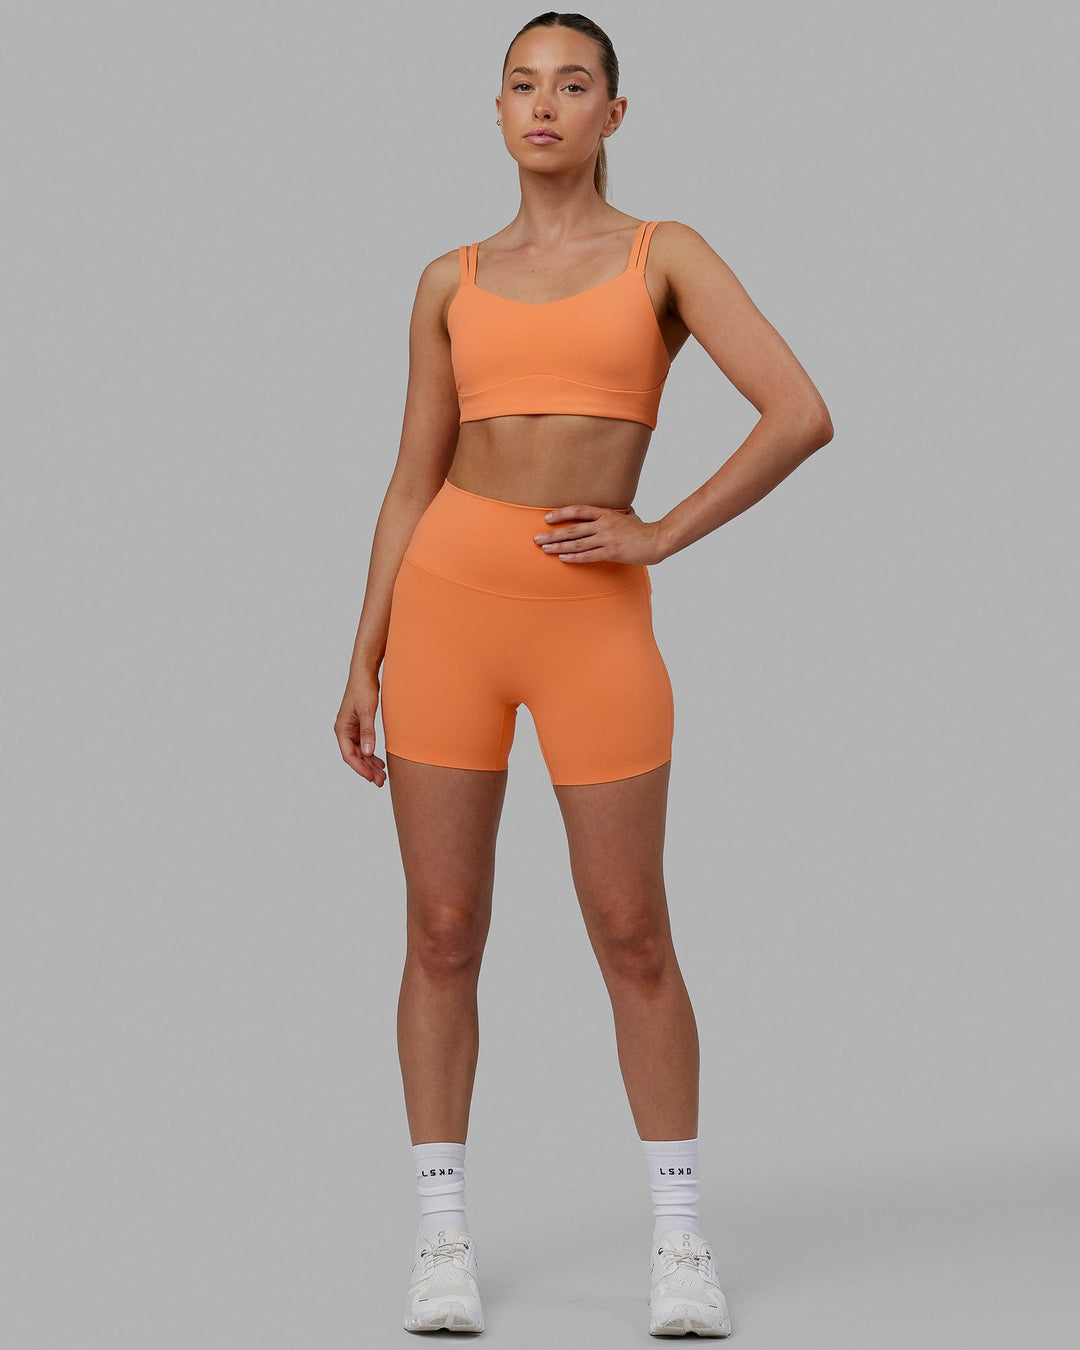 Woman wearing Vogue Sports Bra - Tangerine